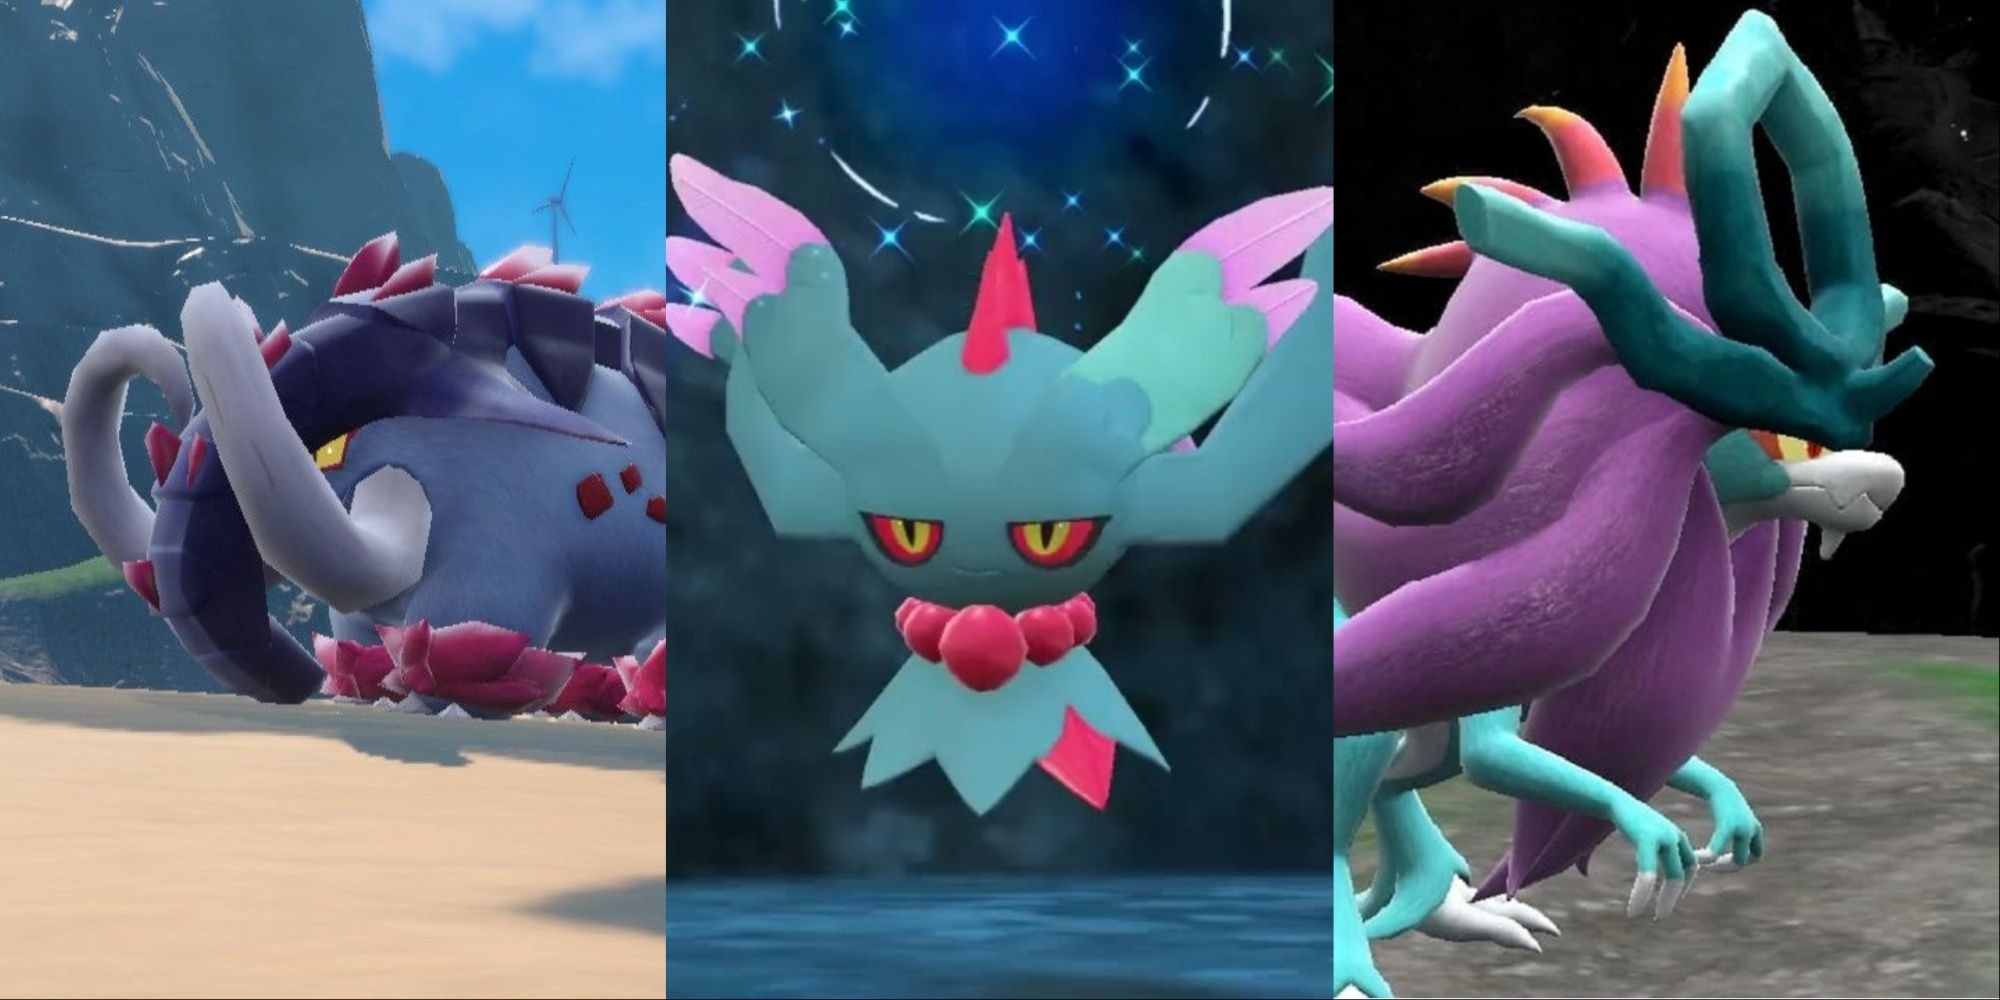 Pokémon Scarlet e Violet - Todos os Pokémon Paradoxo